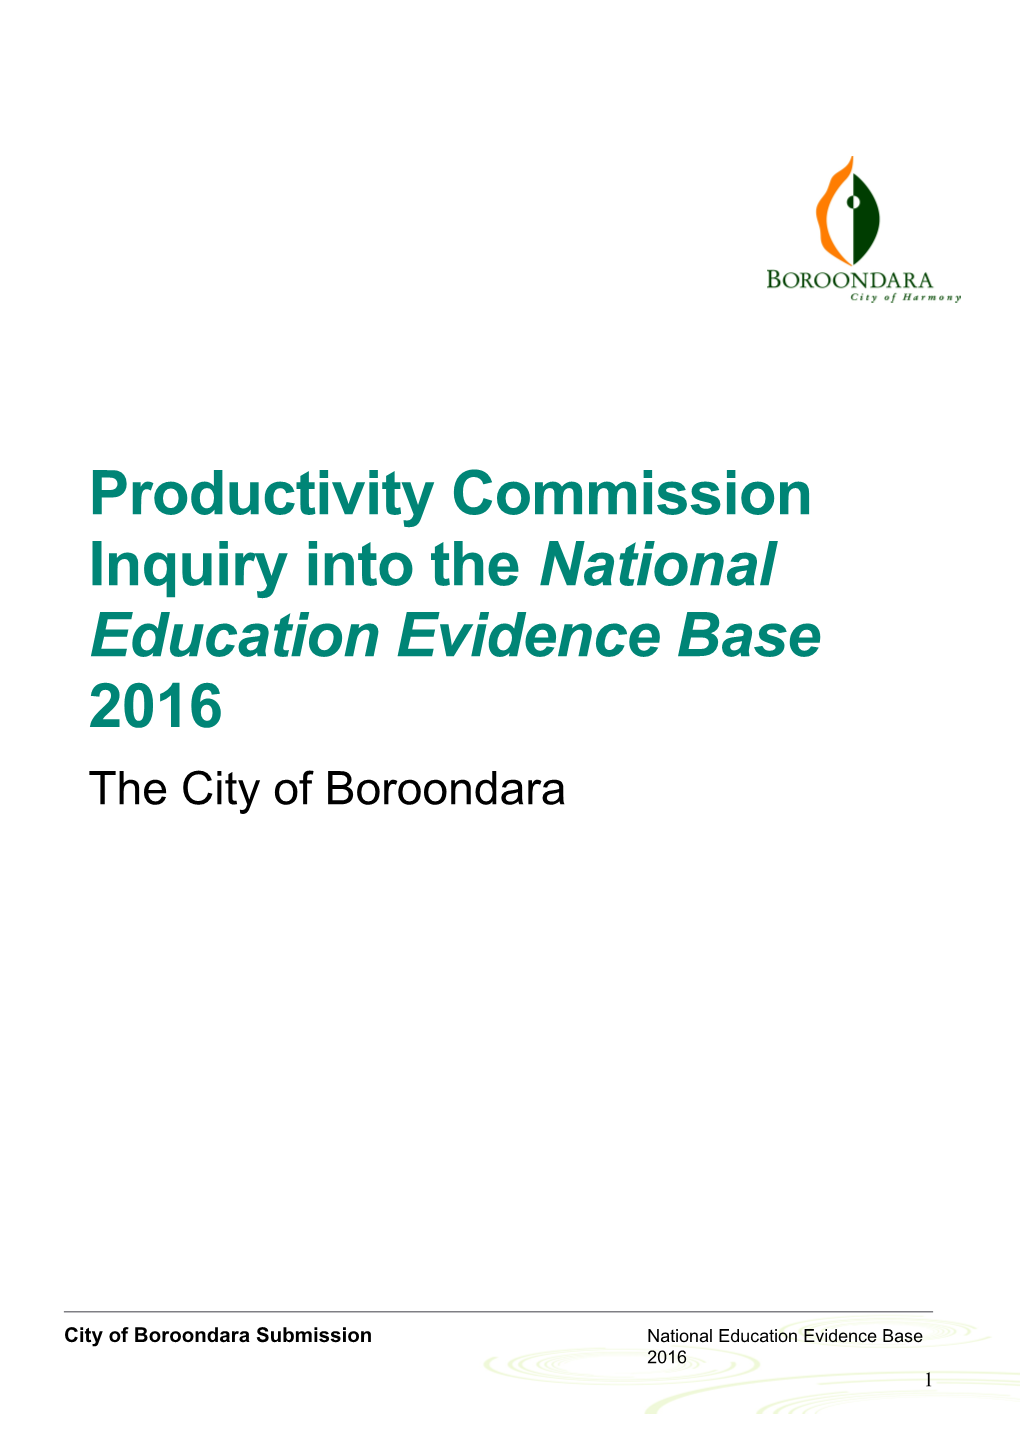 Submission 20 - City of Boroondara - Education Evidence Base - Public Inquiry